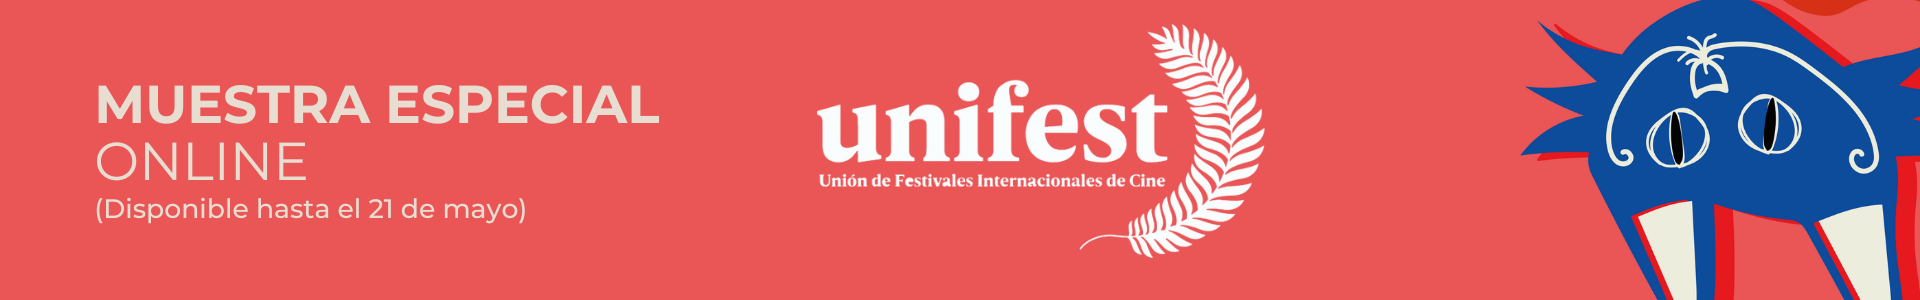 Muestra especial online unifest